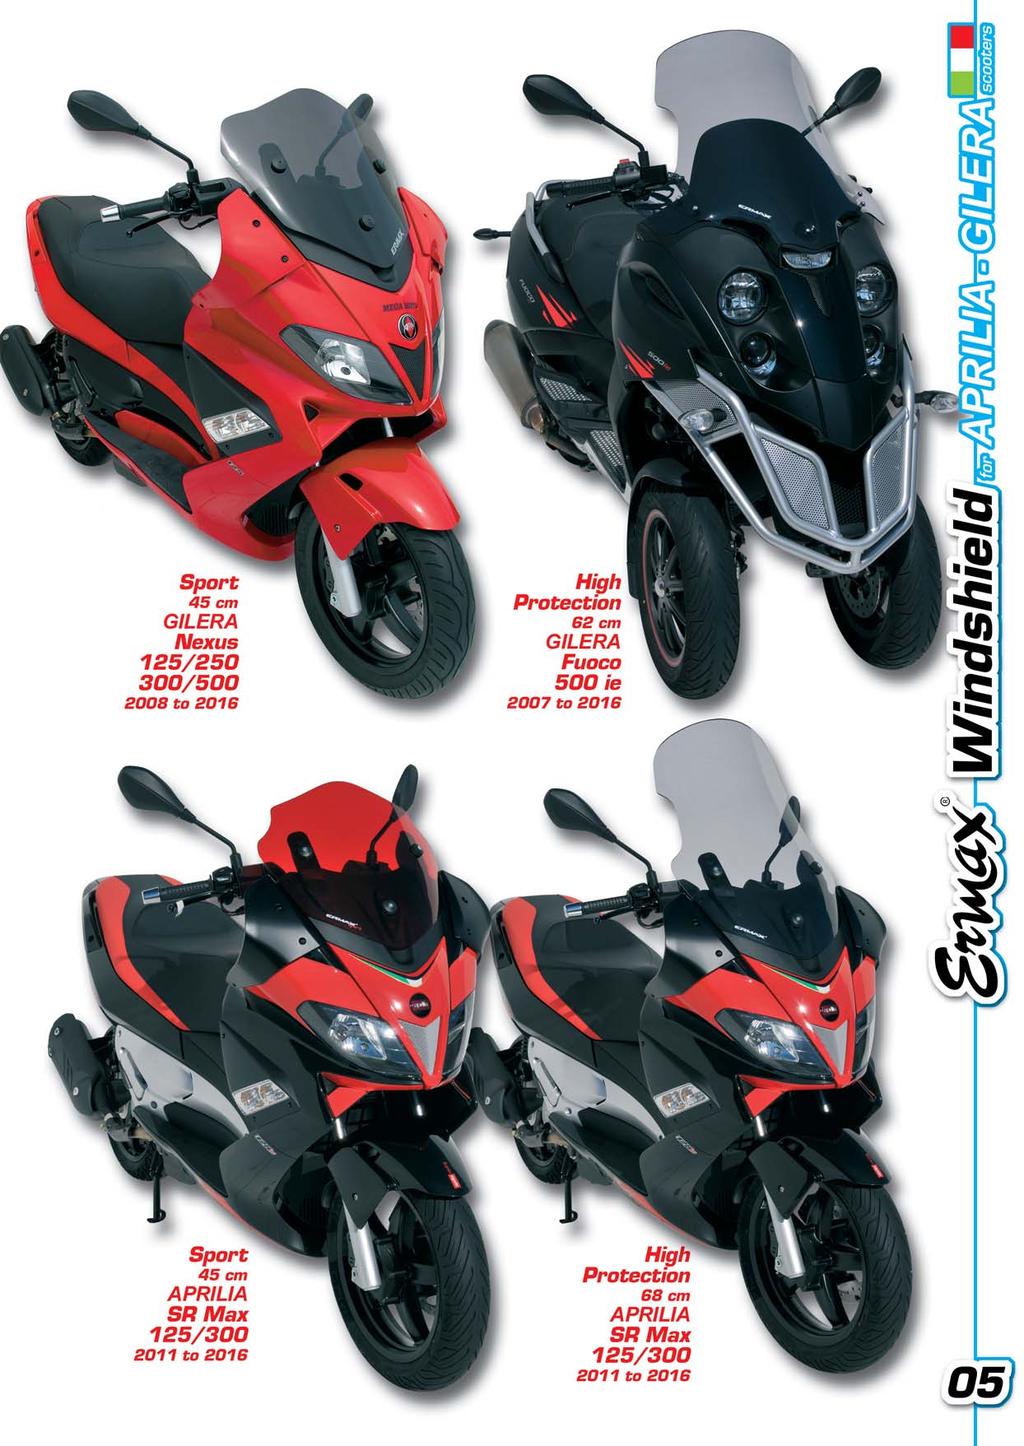 The use of the APRILIA, GILERA brands andor photos representing APRILIA, GILERA scooter models is made